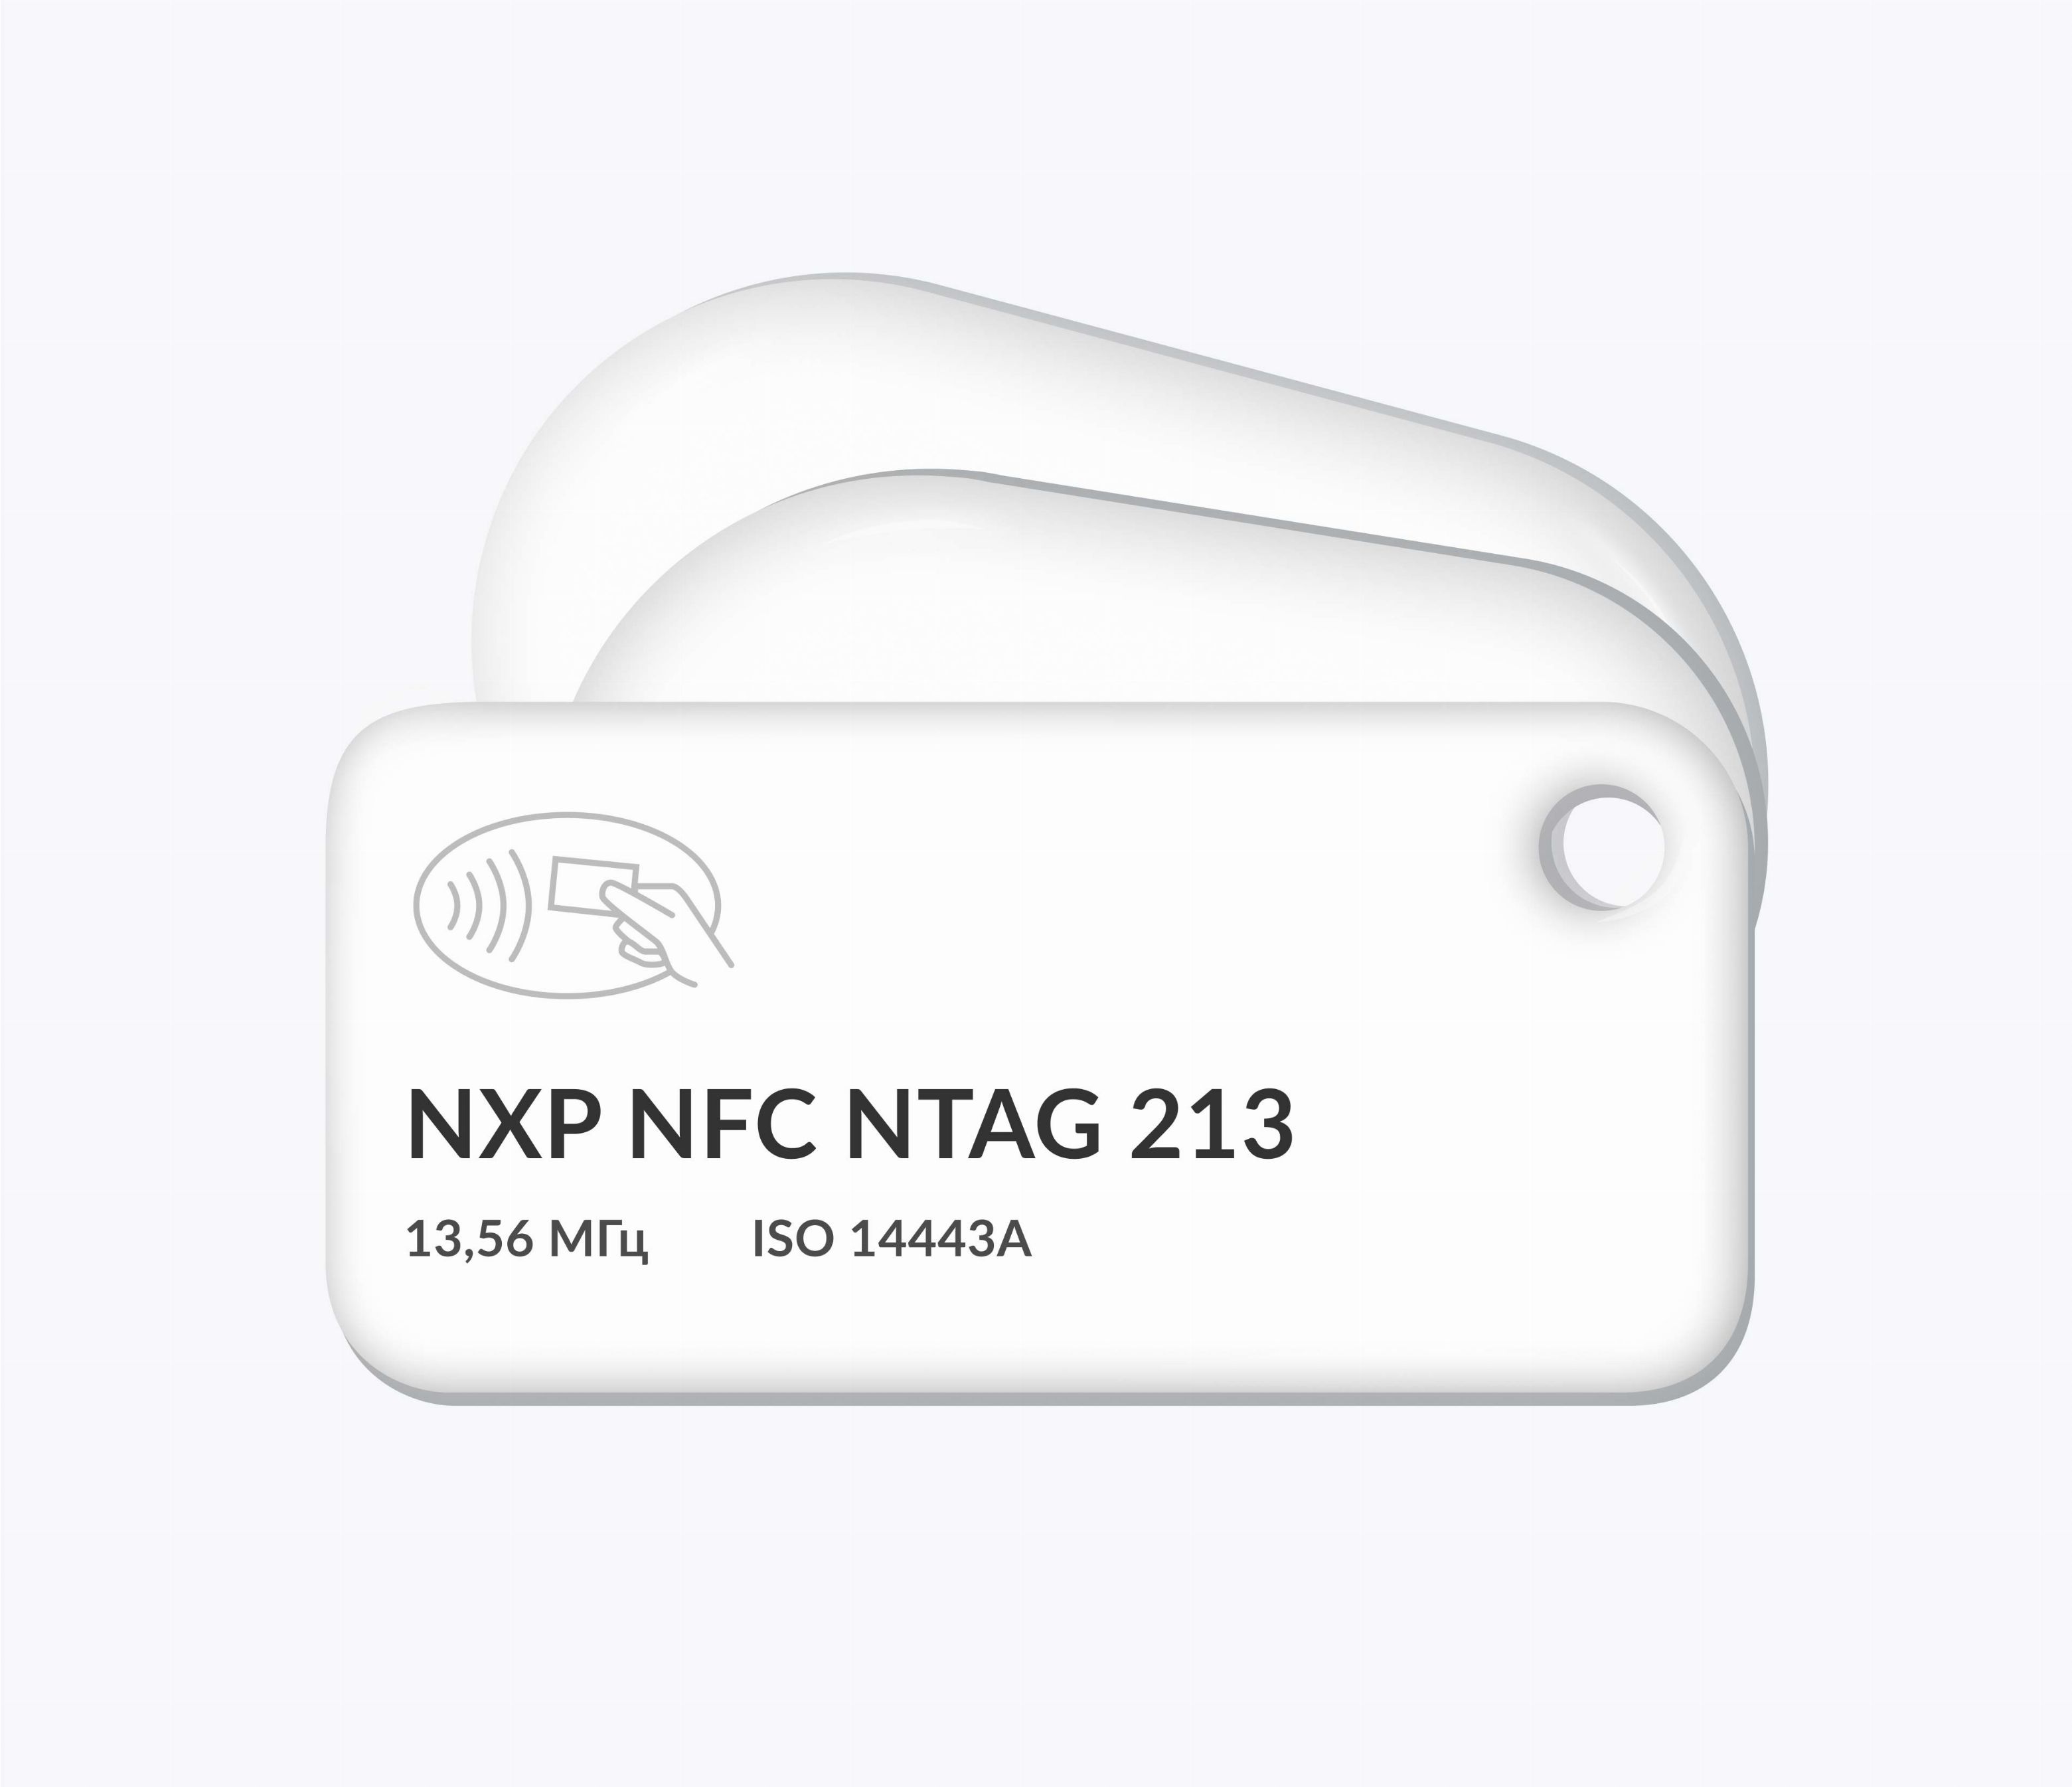 RFID-брелоки NEOKEY® с чипом NXP NFC NTAG 213 и вашим логотипом RFID-брелоки NEOKEY® с чипом NXP NFC NTAG 213 и вашим логотипом